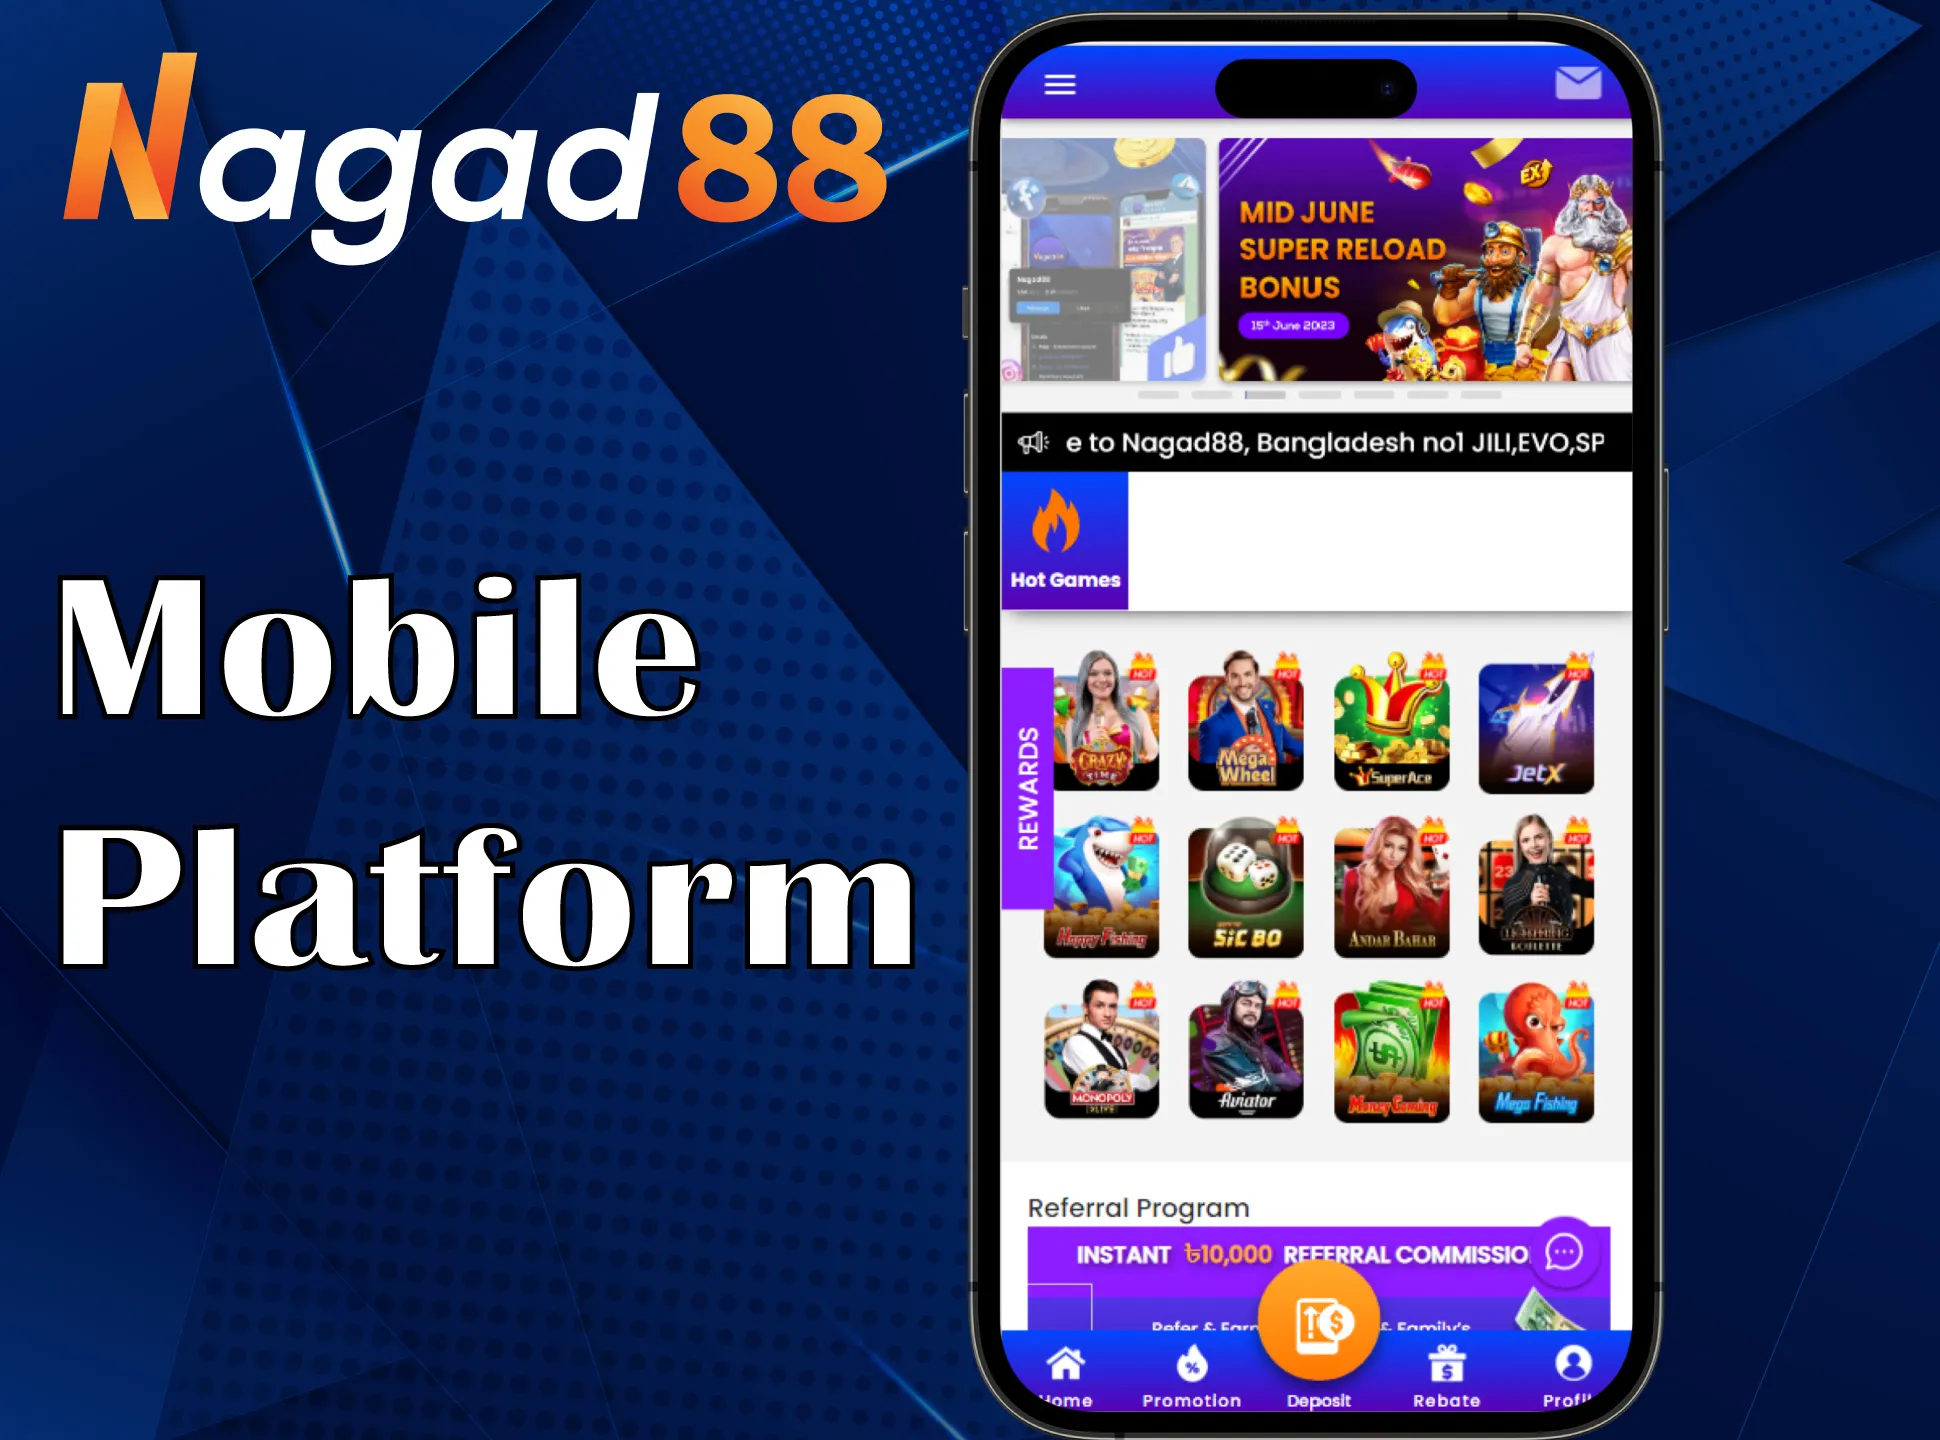 Try the mobile platform Nagad88 .